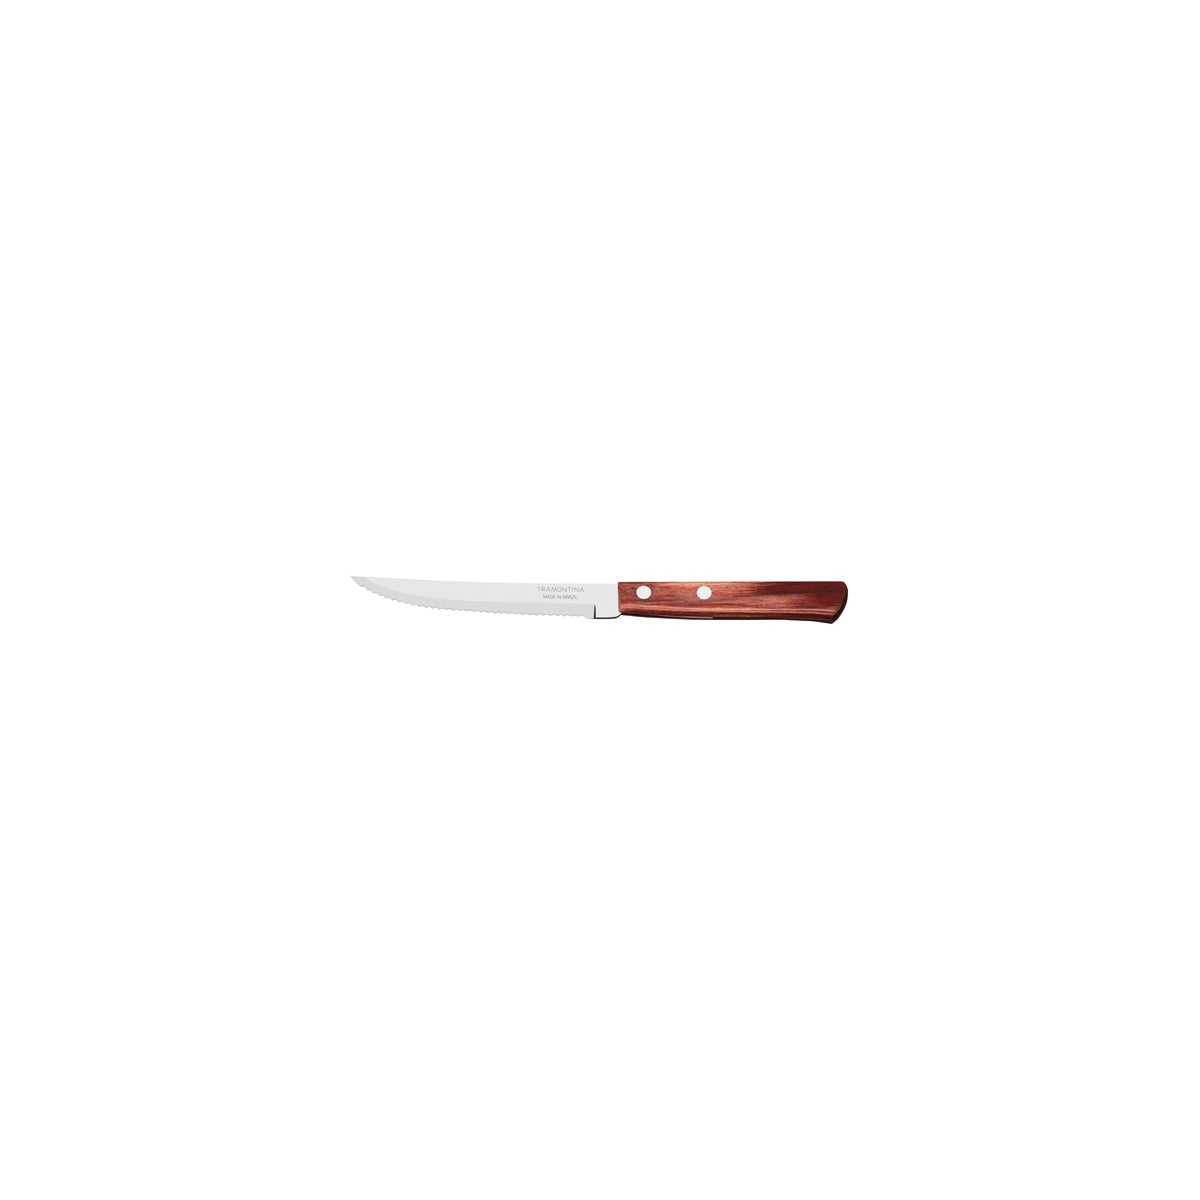 TM21100/475 Tramontina Churrasco Steak Knife Serrated Narrow Blade with Polywood Handle Red 127mm Tomkin Australia Hospitality Supplies